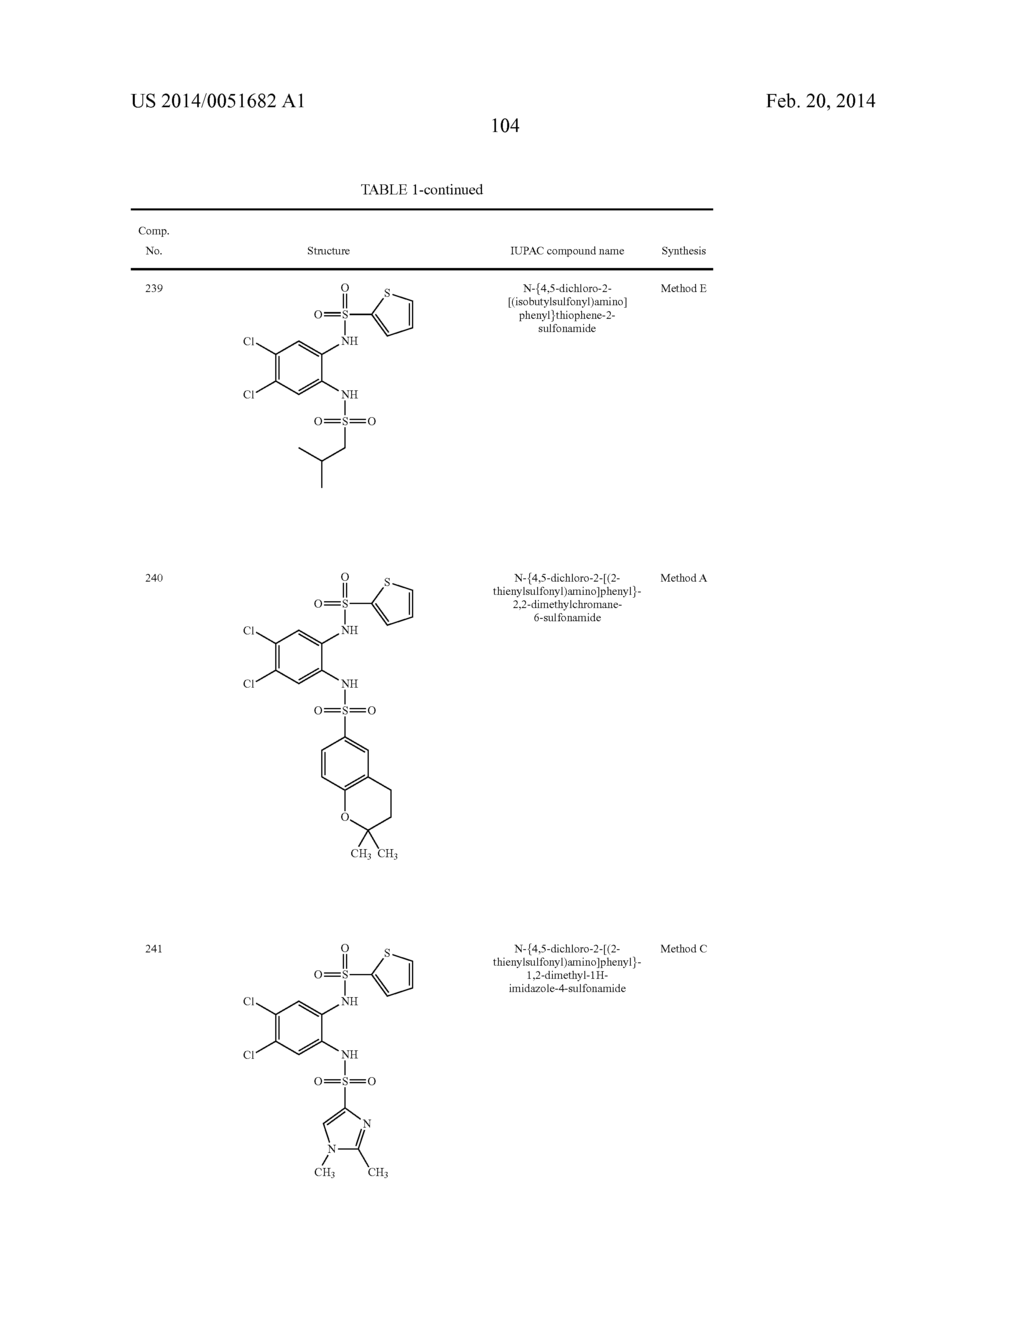 NOVEL 1,2- BIS-SULFONAMIDE DERIVATIVES AS CHEMOKINE RECEPTOR MODULATORS - diagram, schematic, and image 105